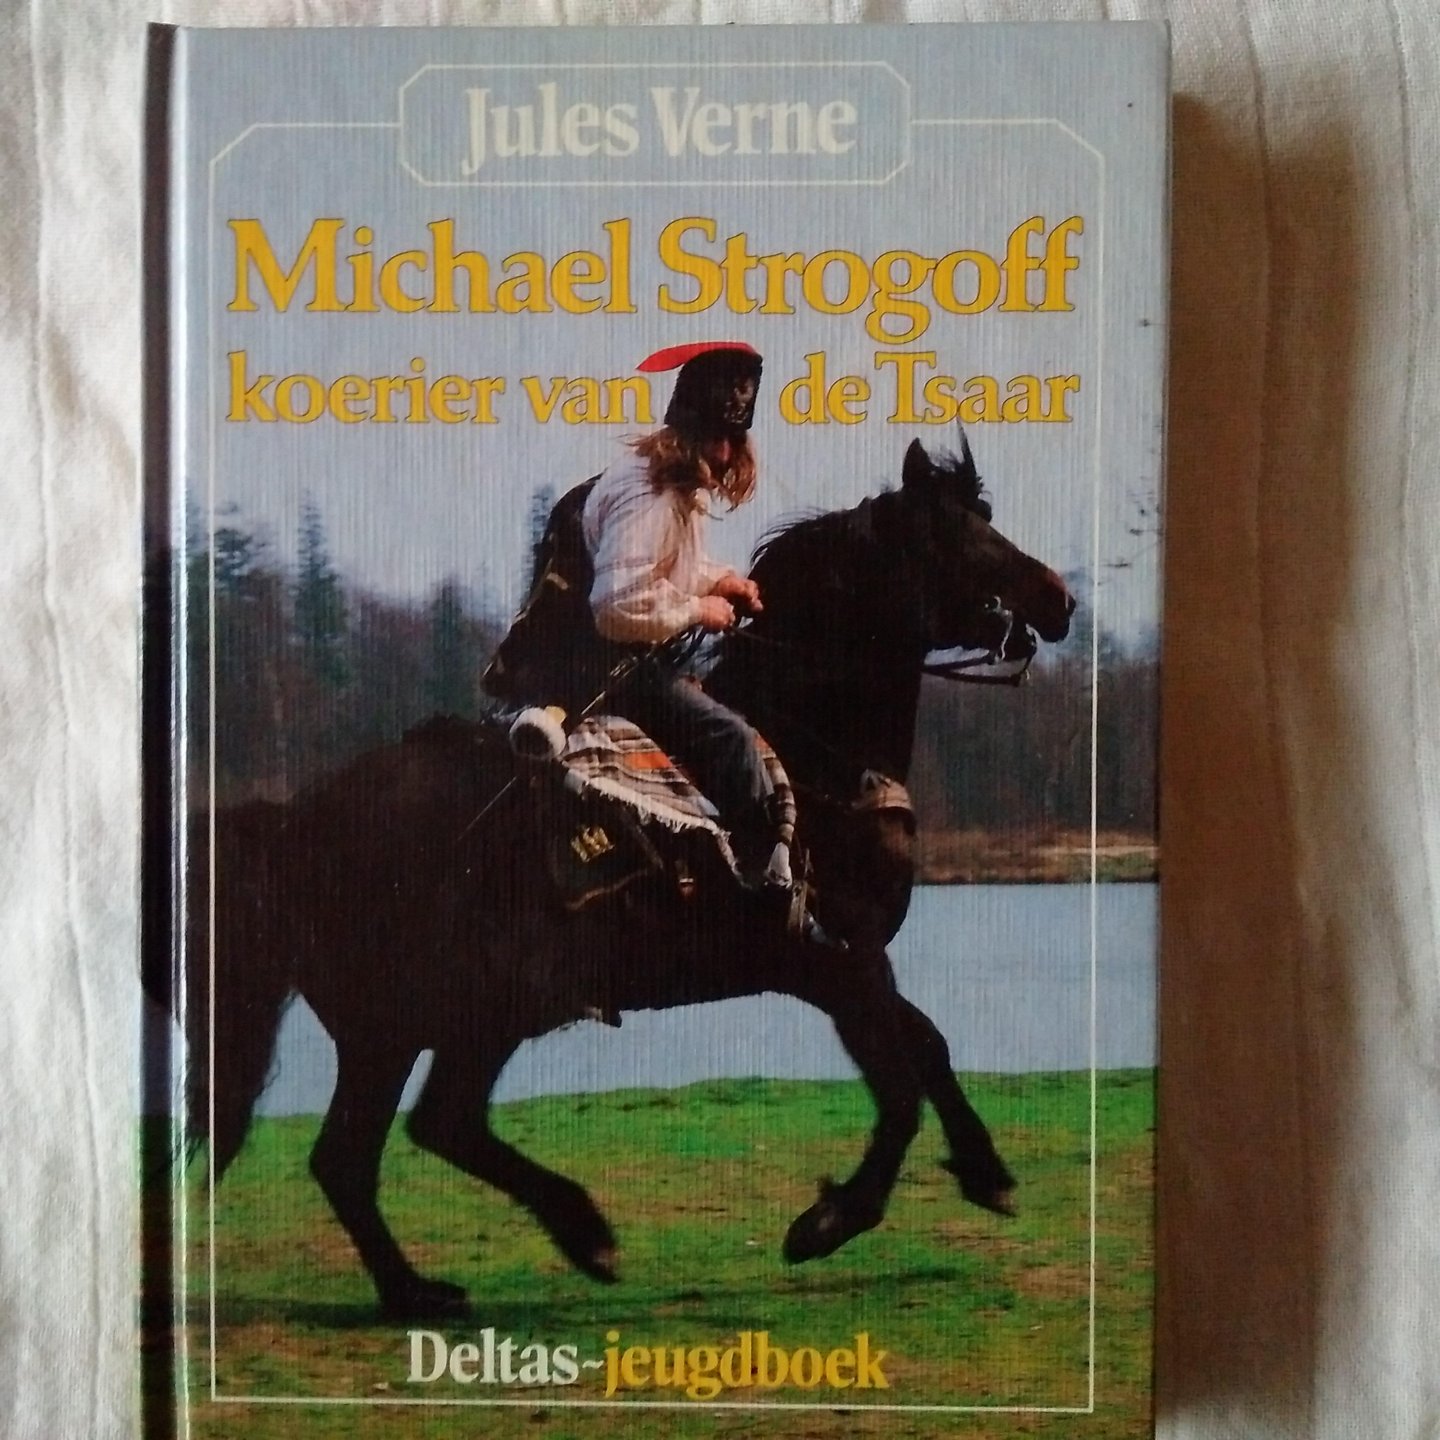 Verne, Jules - Michael Strogoff koerier van de tsaar